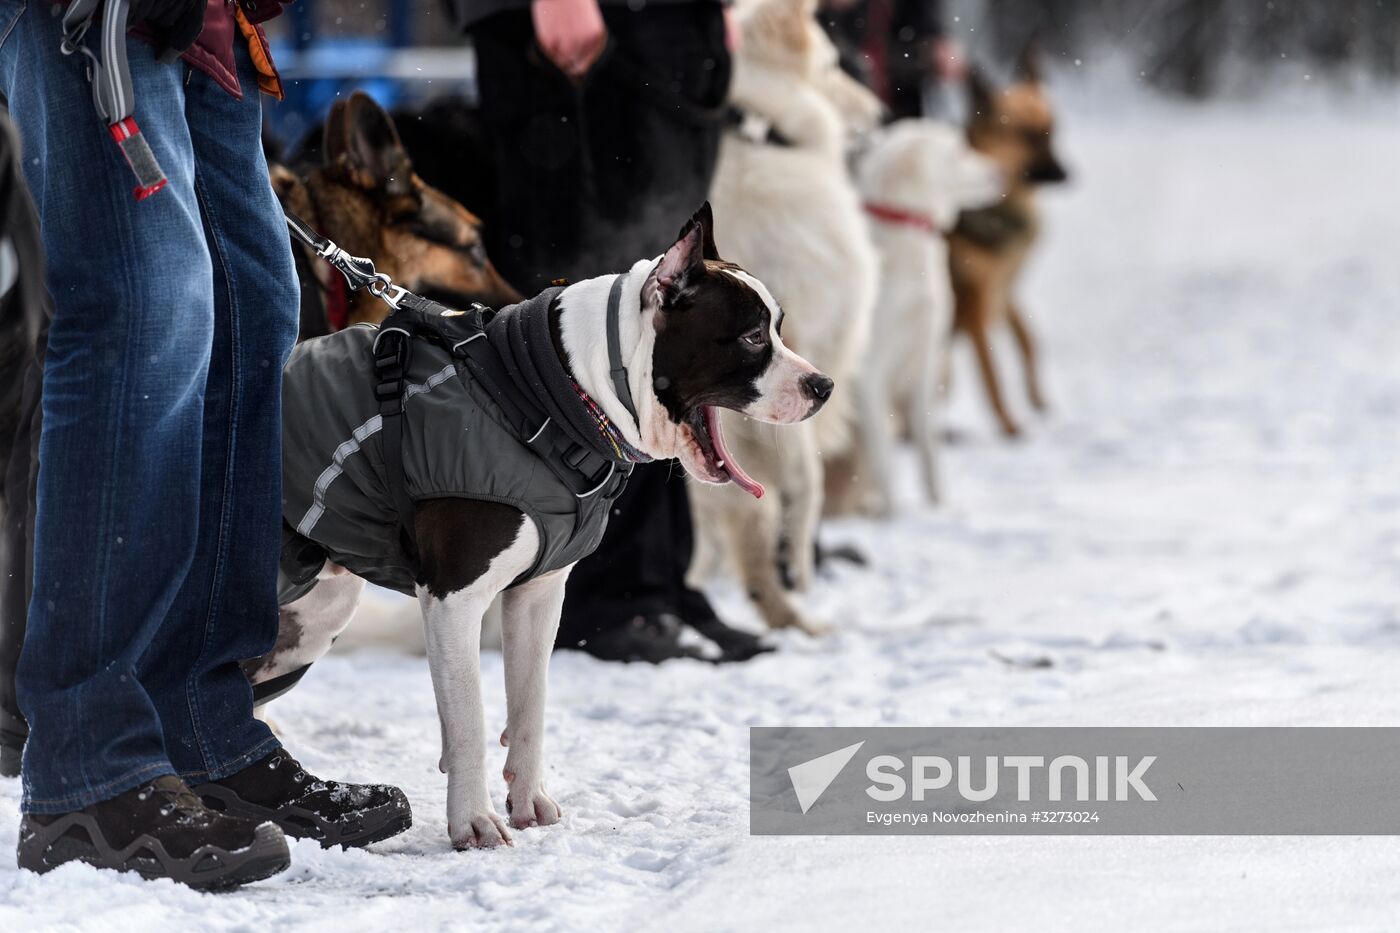 Sokolniki service dog stadium unveiled